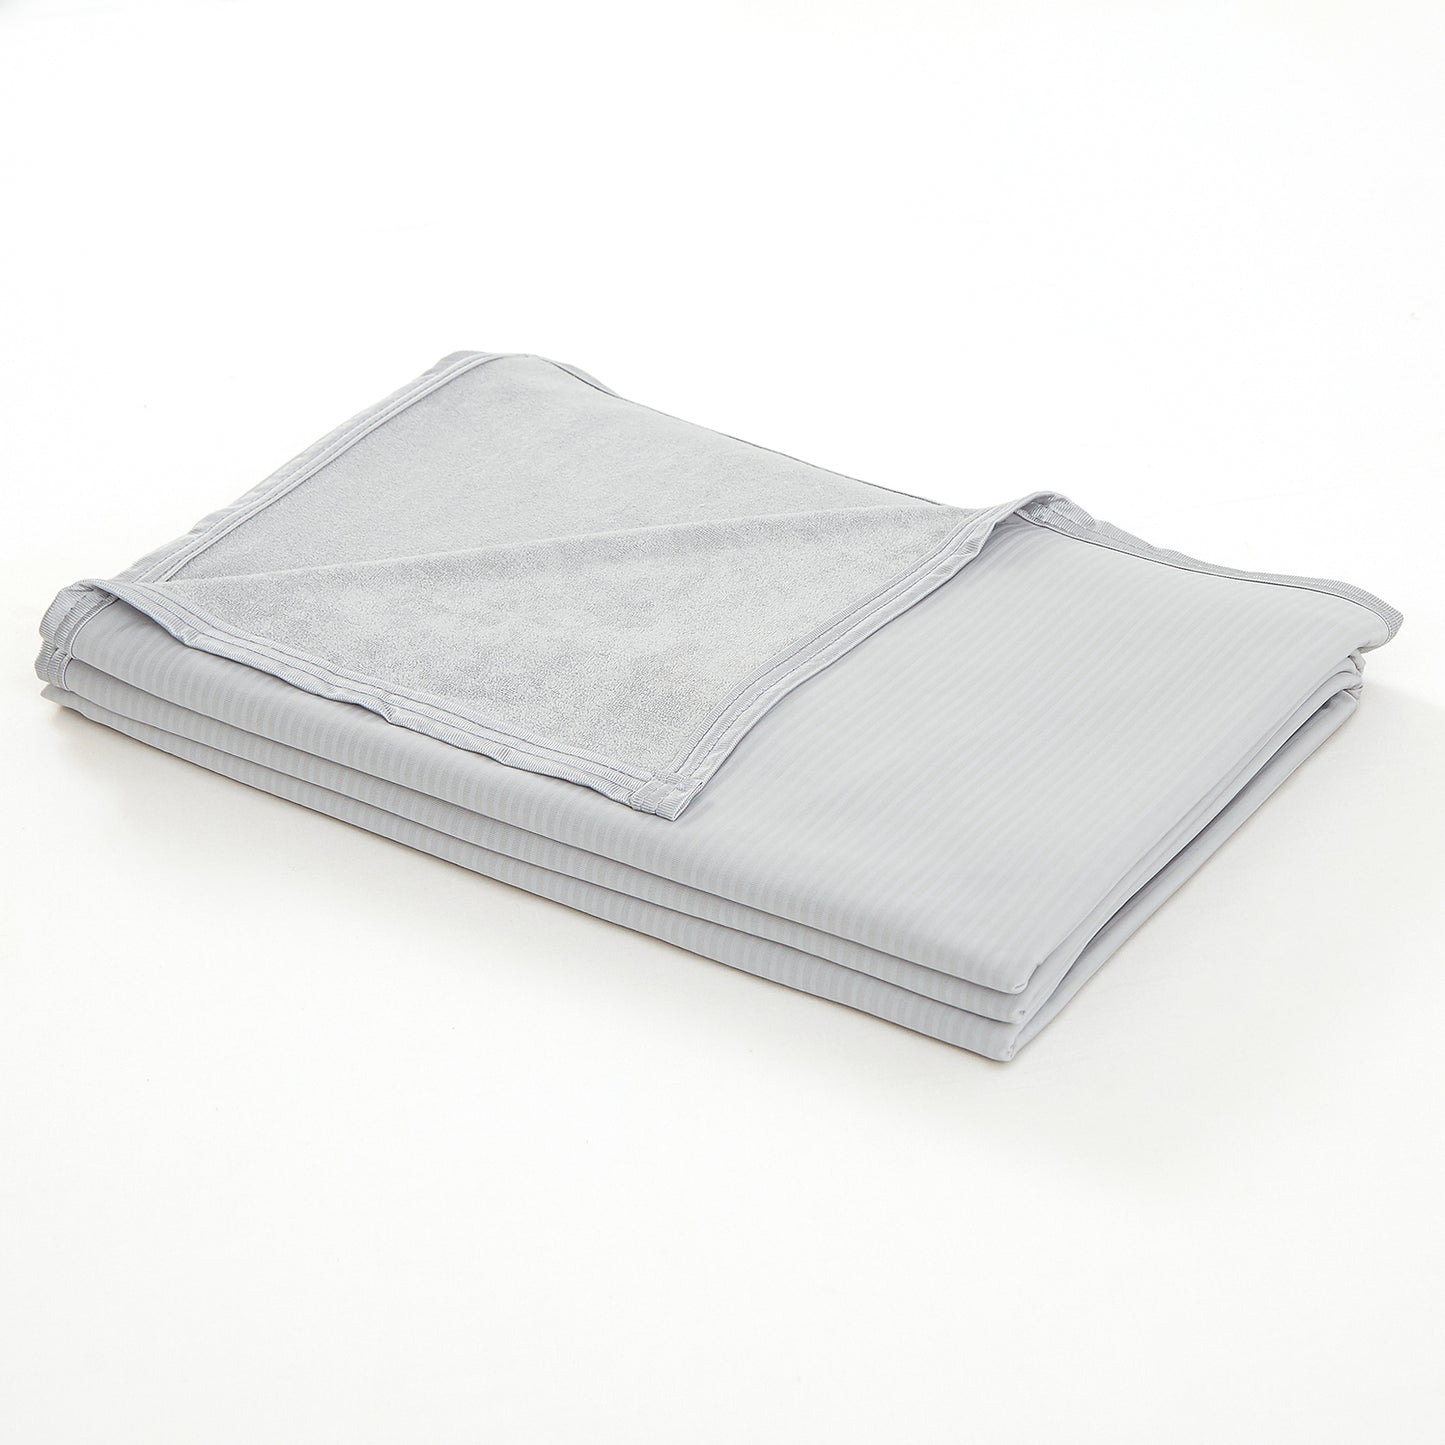 WONGS BEDDING Grey Cool feeling Blanket